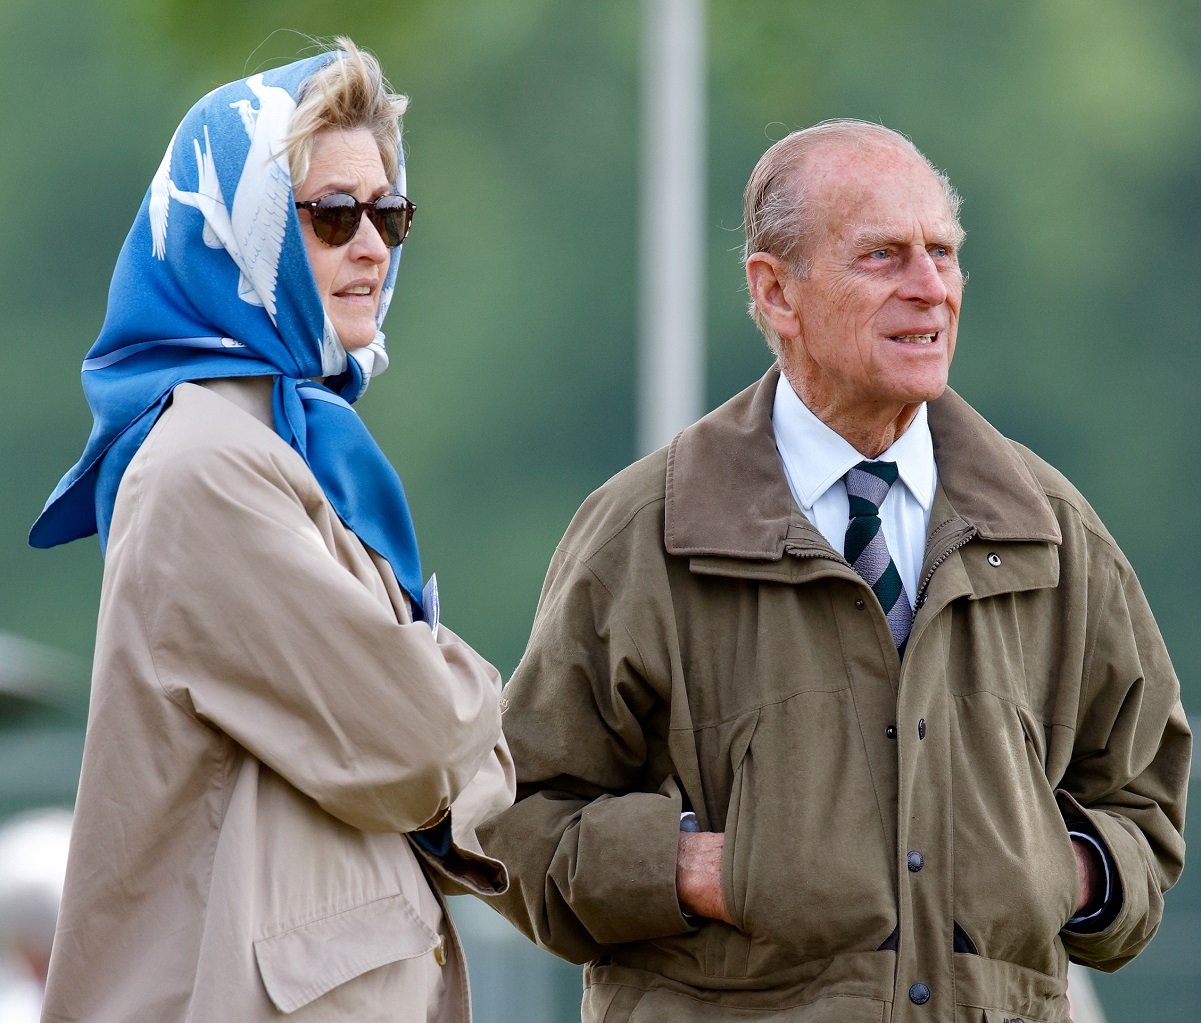  Penelope Knatchbull, Lady Brabourne and Prince Philip, Duke of Edinburgh attend the Royal Windsor Horse Show together